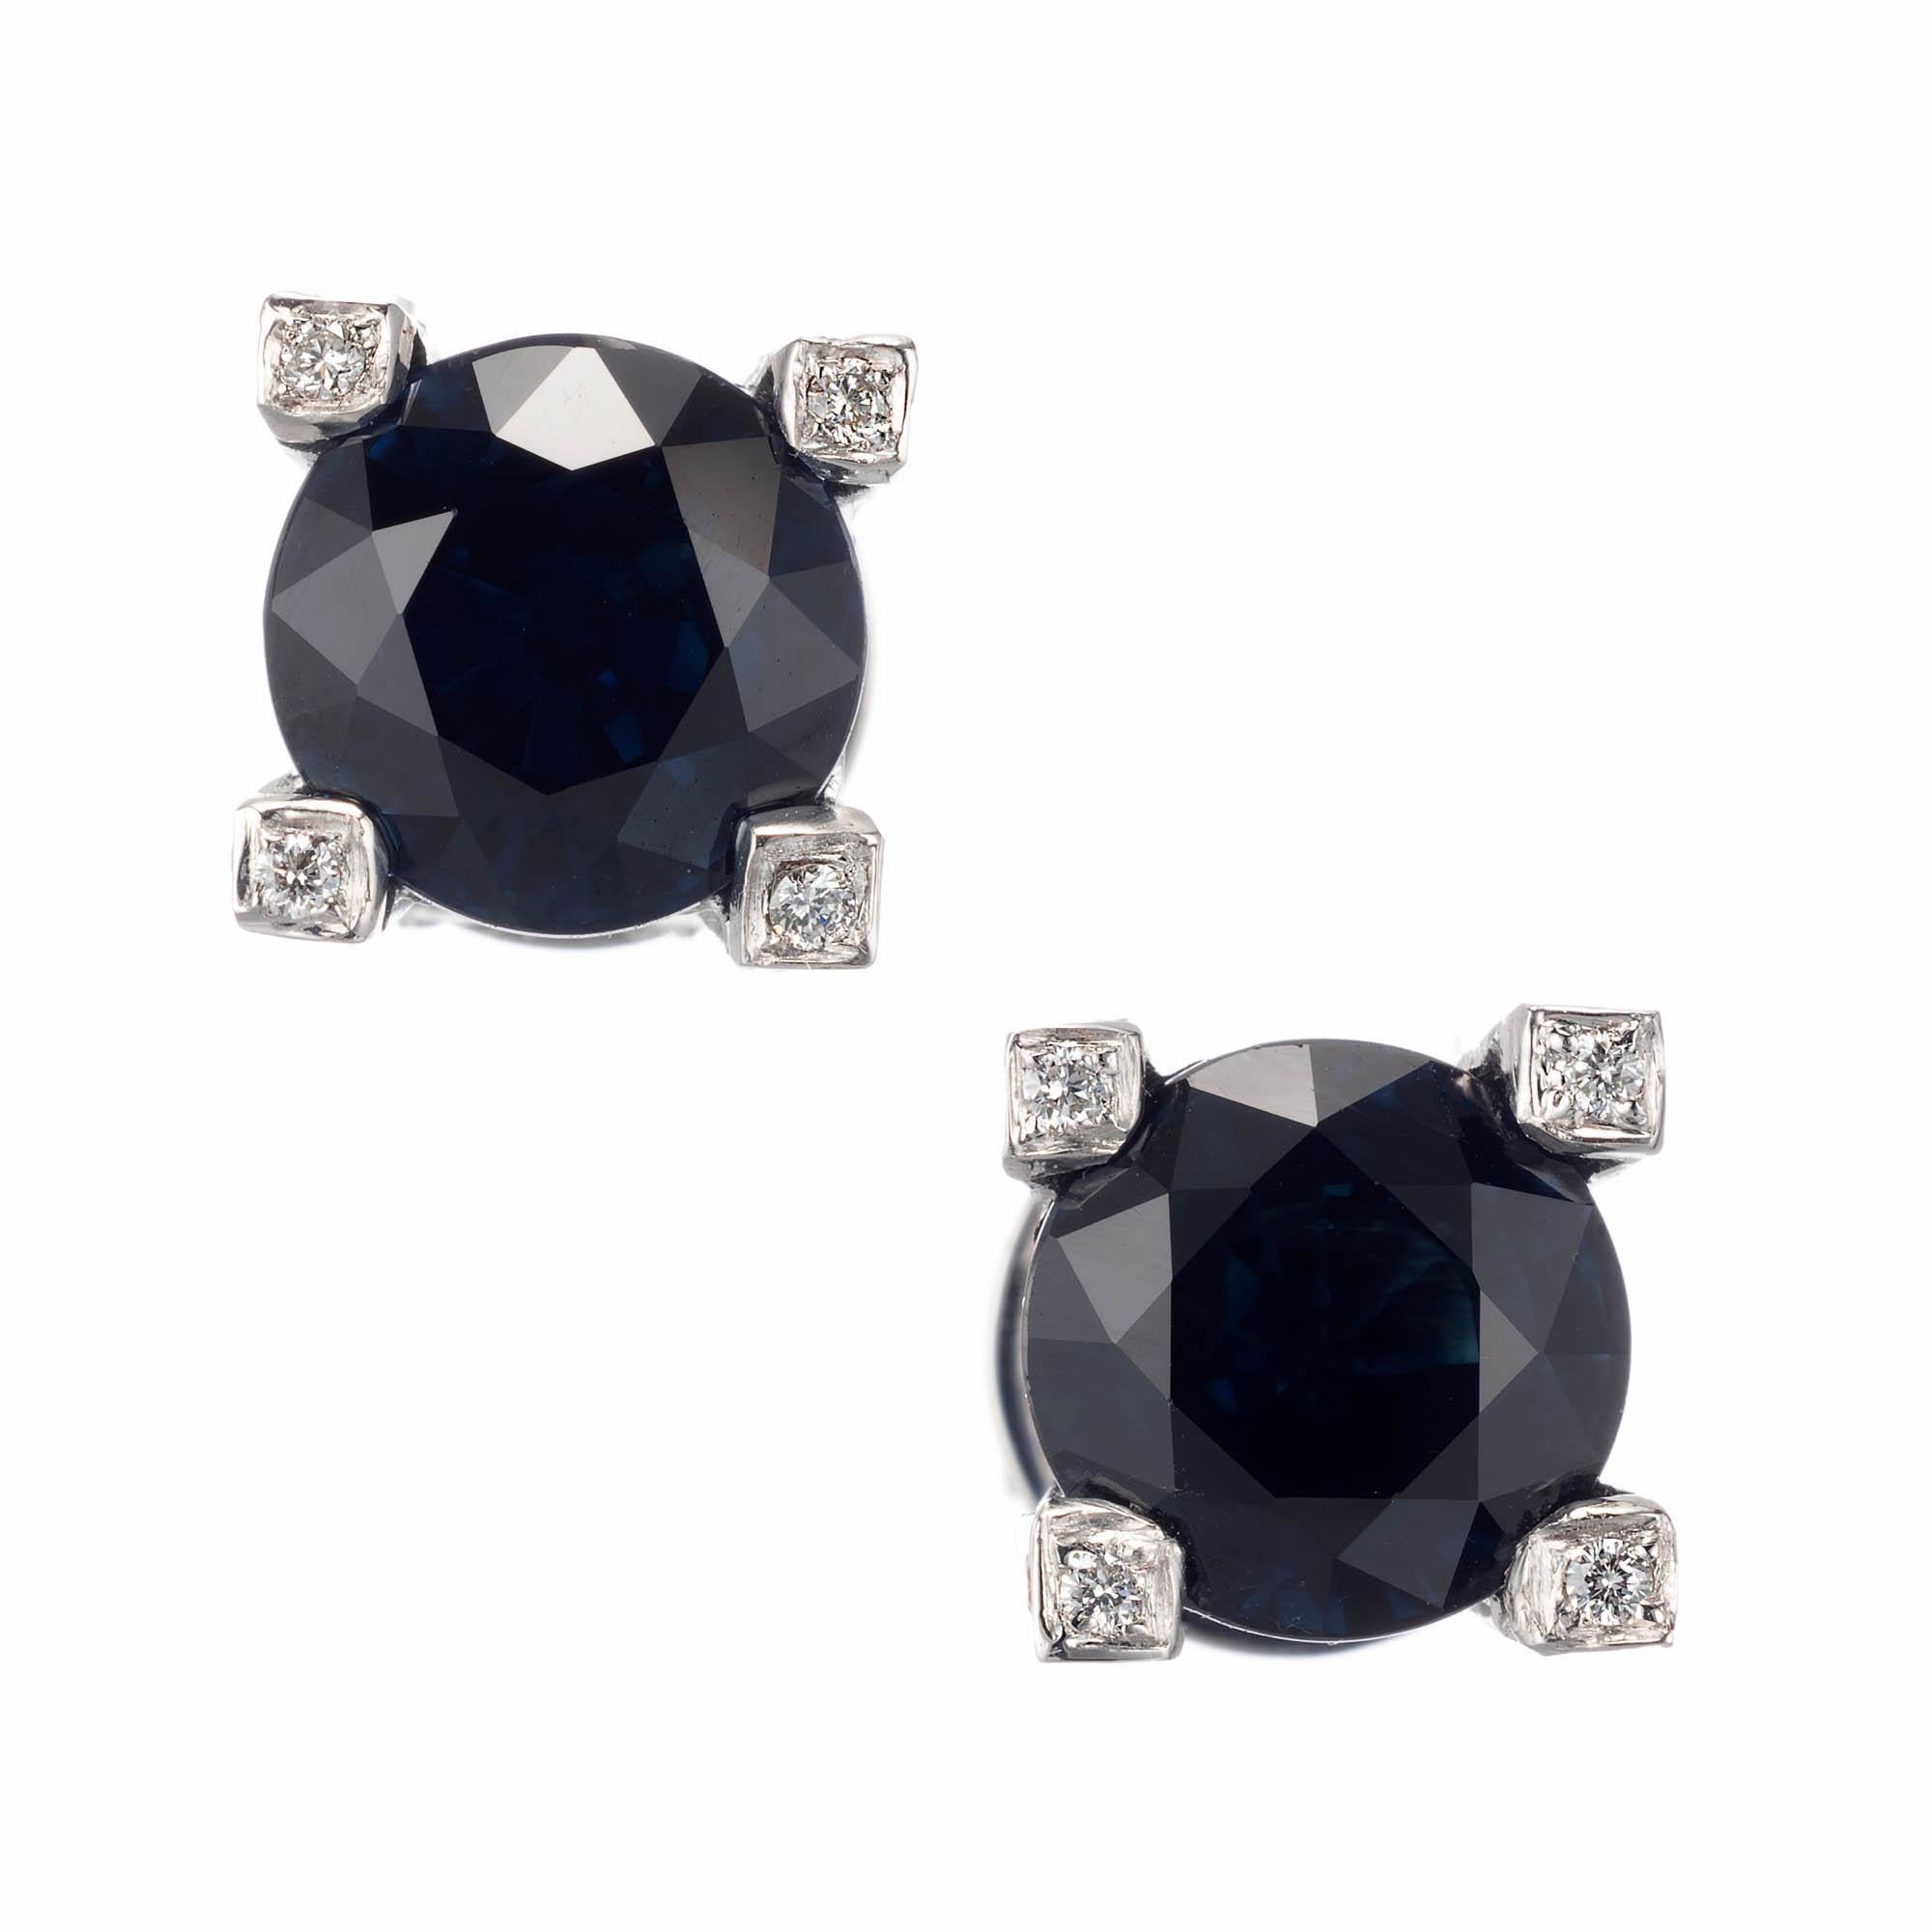 Peter Suchy GIA Certified 5.02 Carat Sapphire Diamond Stud Earrings